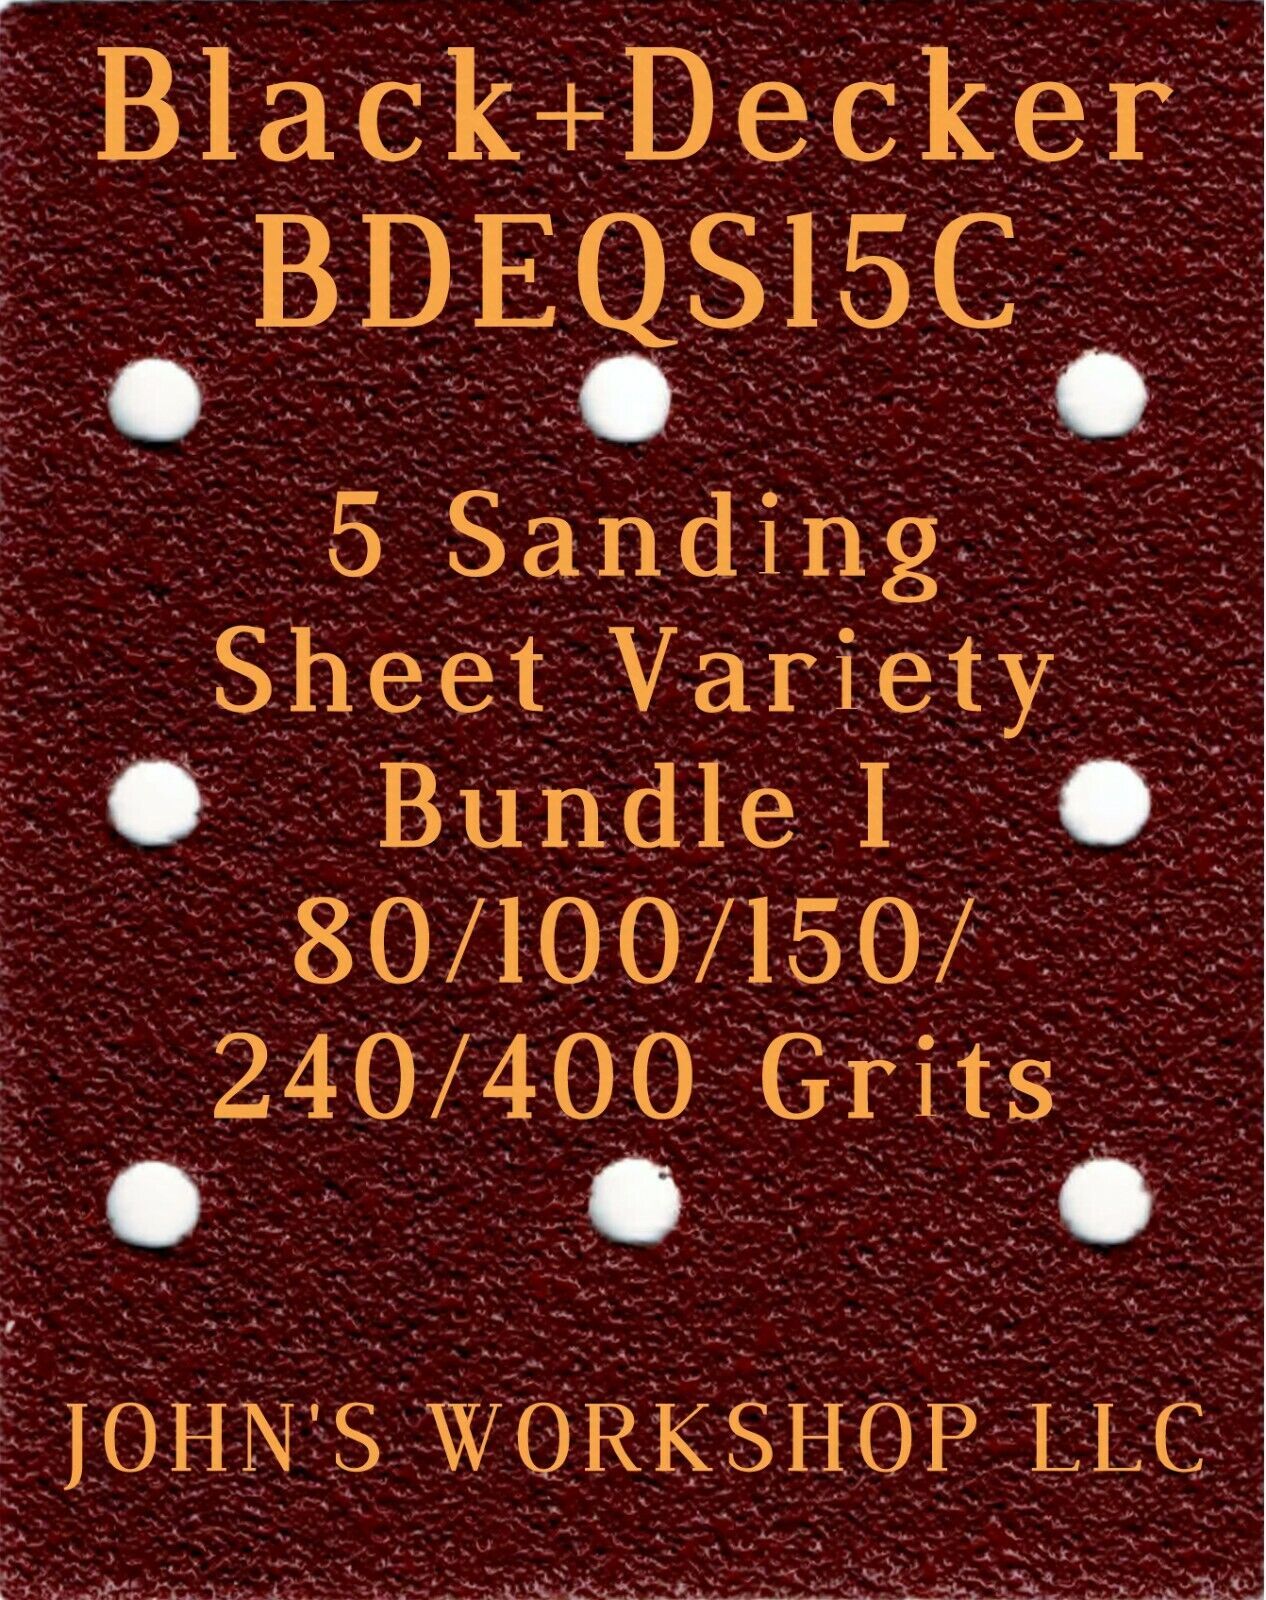 Black+Decker BDEQS15C - 80/100/150/240/400 Grits - 5 Sandpaper Variety Bundle I - £3.99 GBP